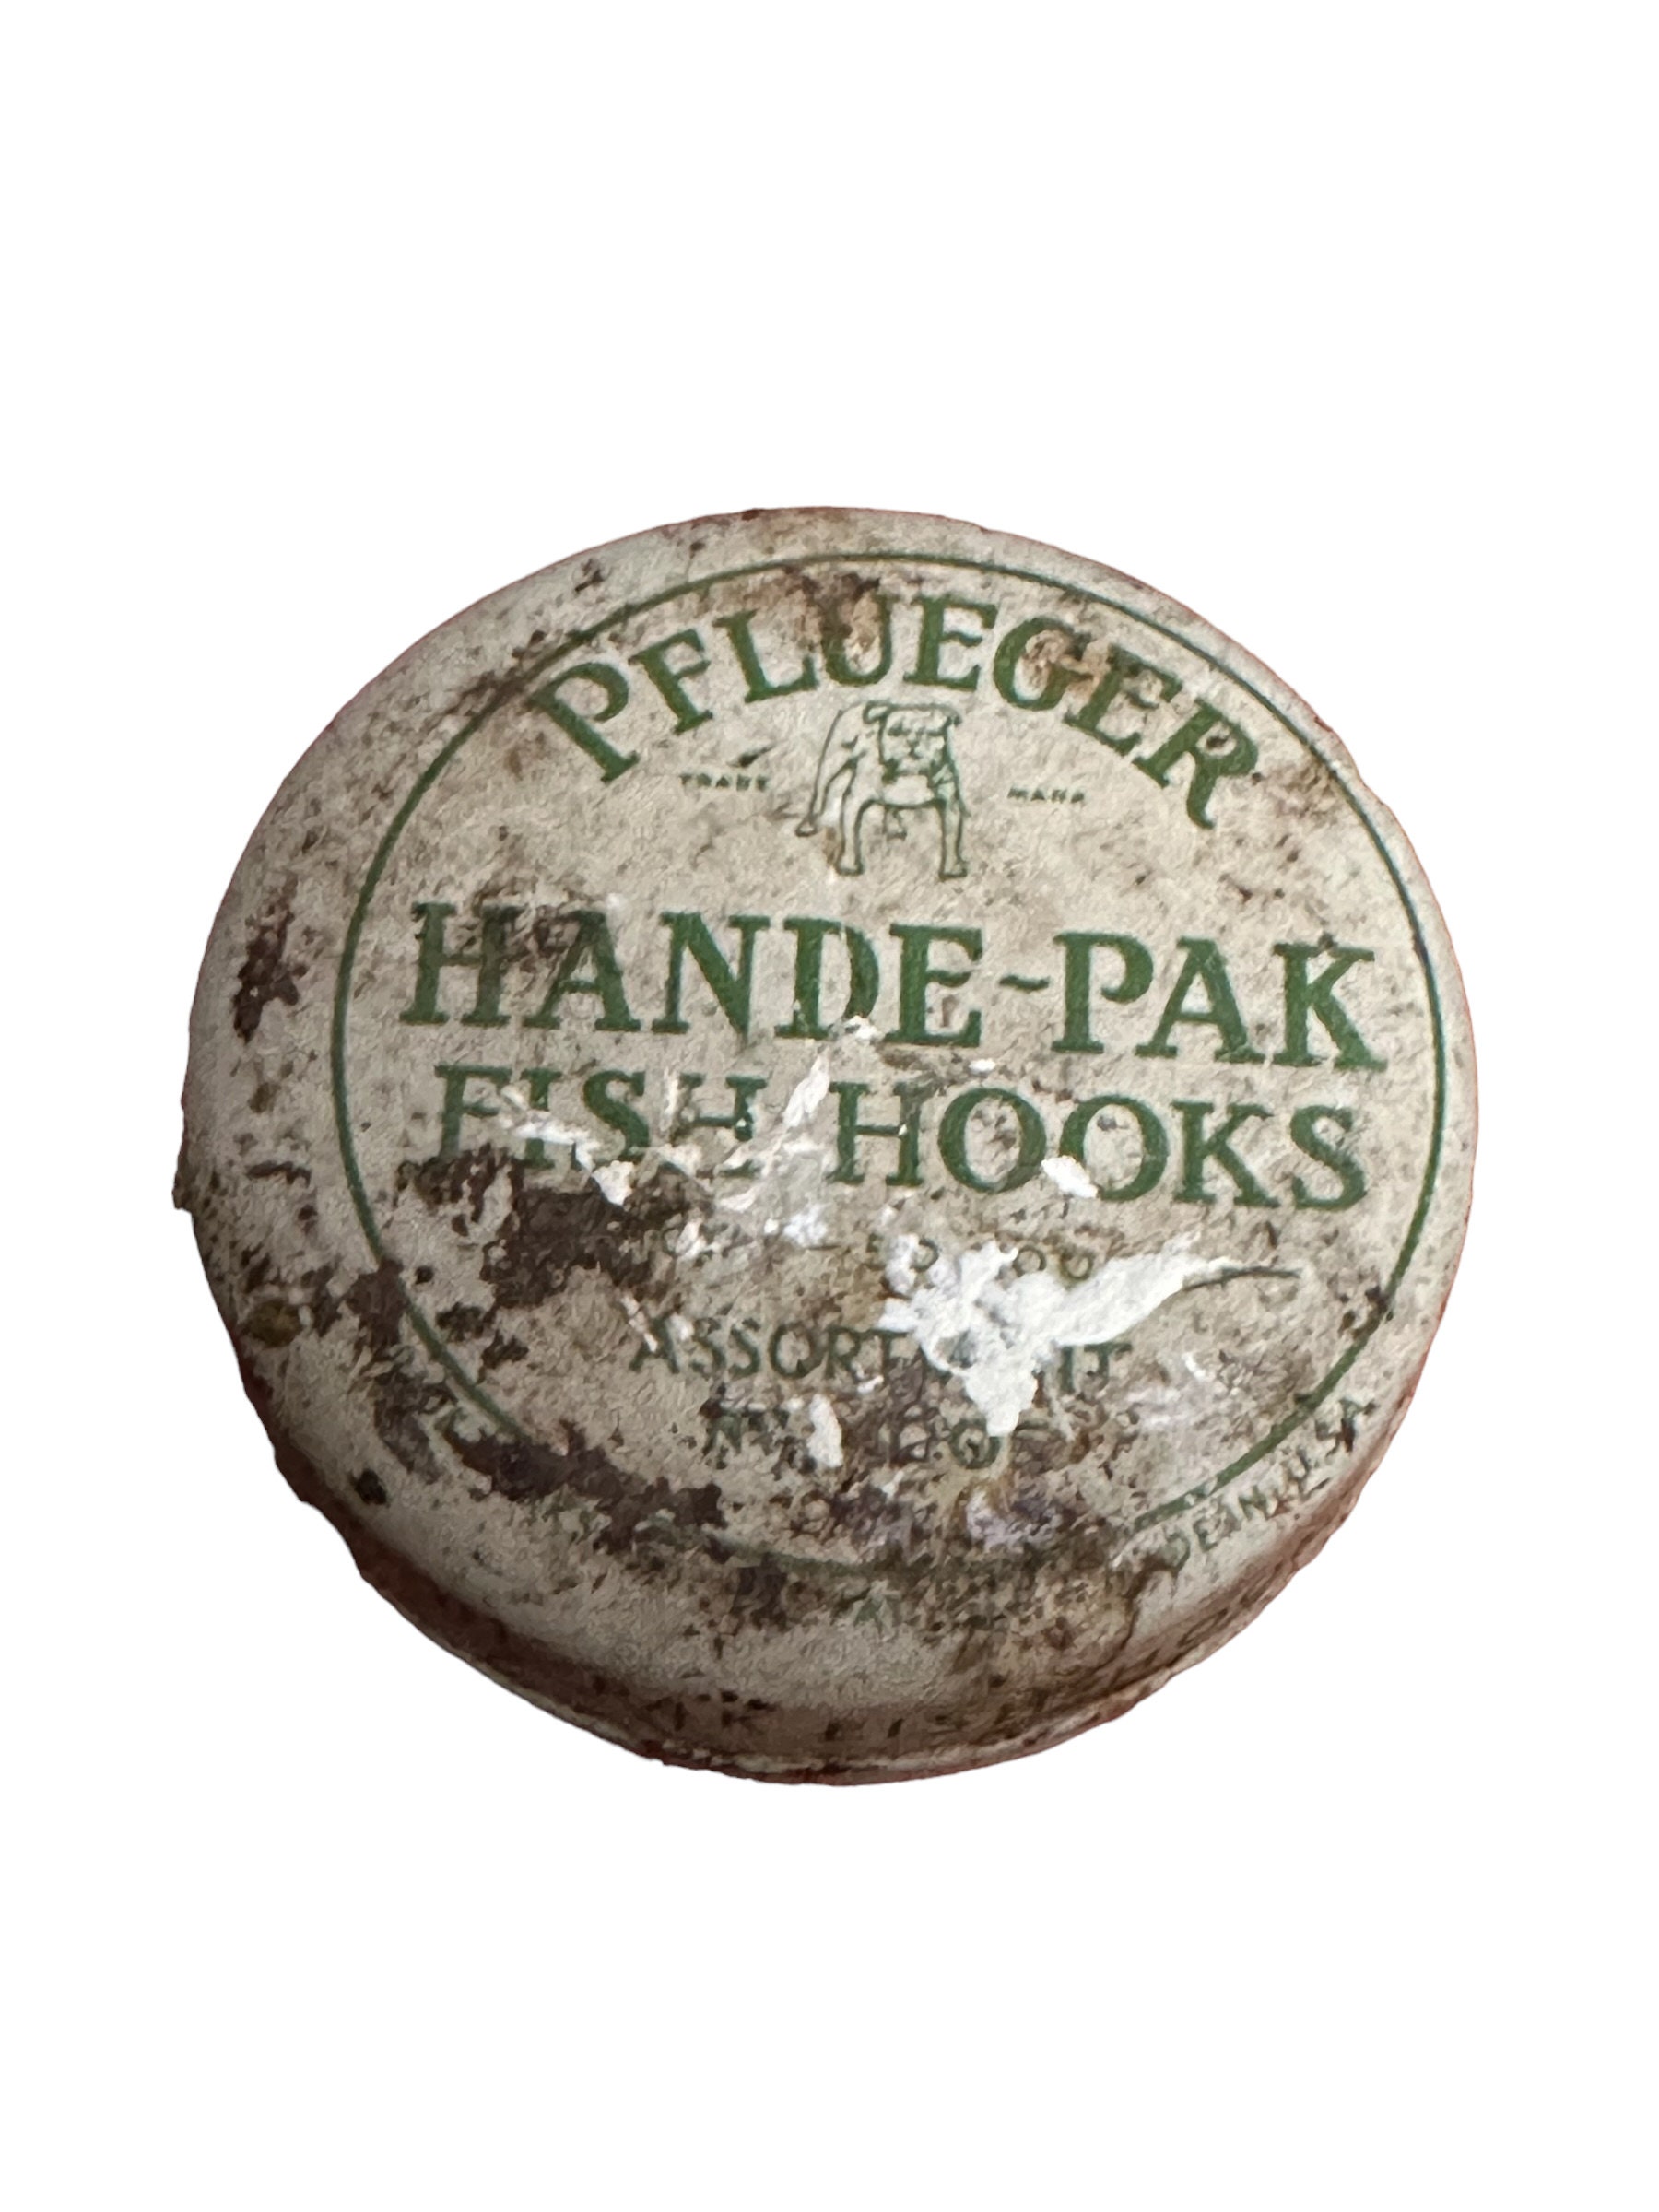 Vintage Pflueger Fish Hooks Hande-pak Assorted Sizes Orginally 50